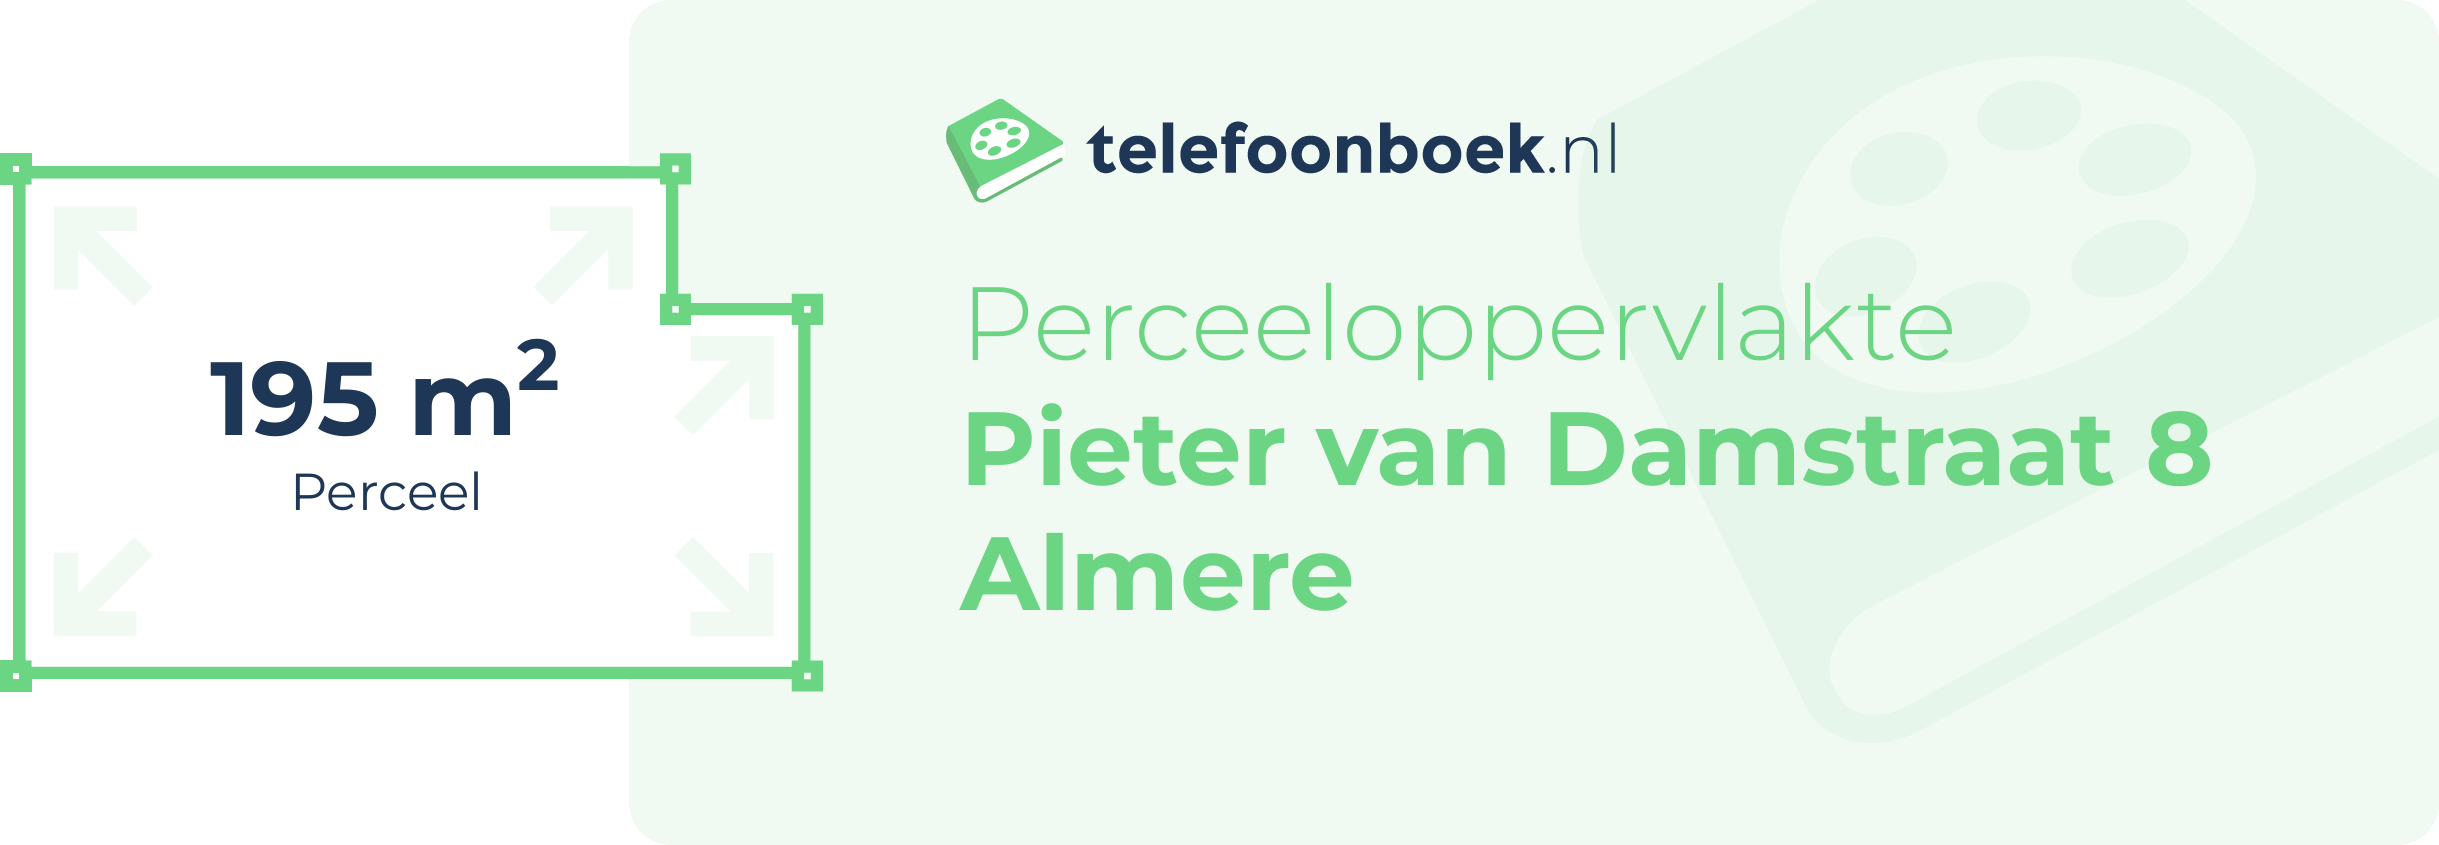 Perceeloppervlakte Pieter Van Damstraat 8 Almere